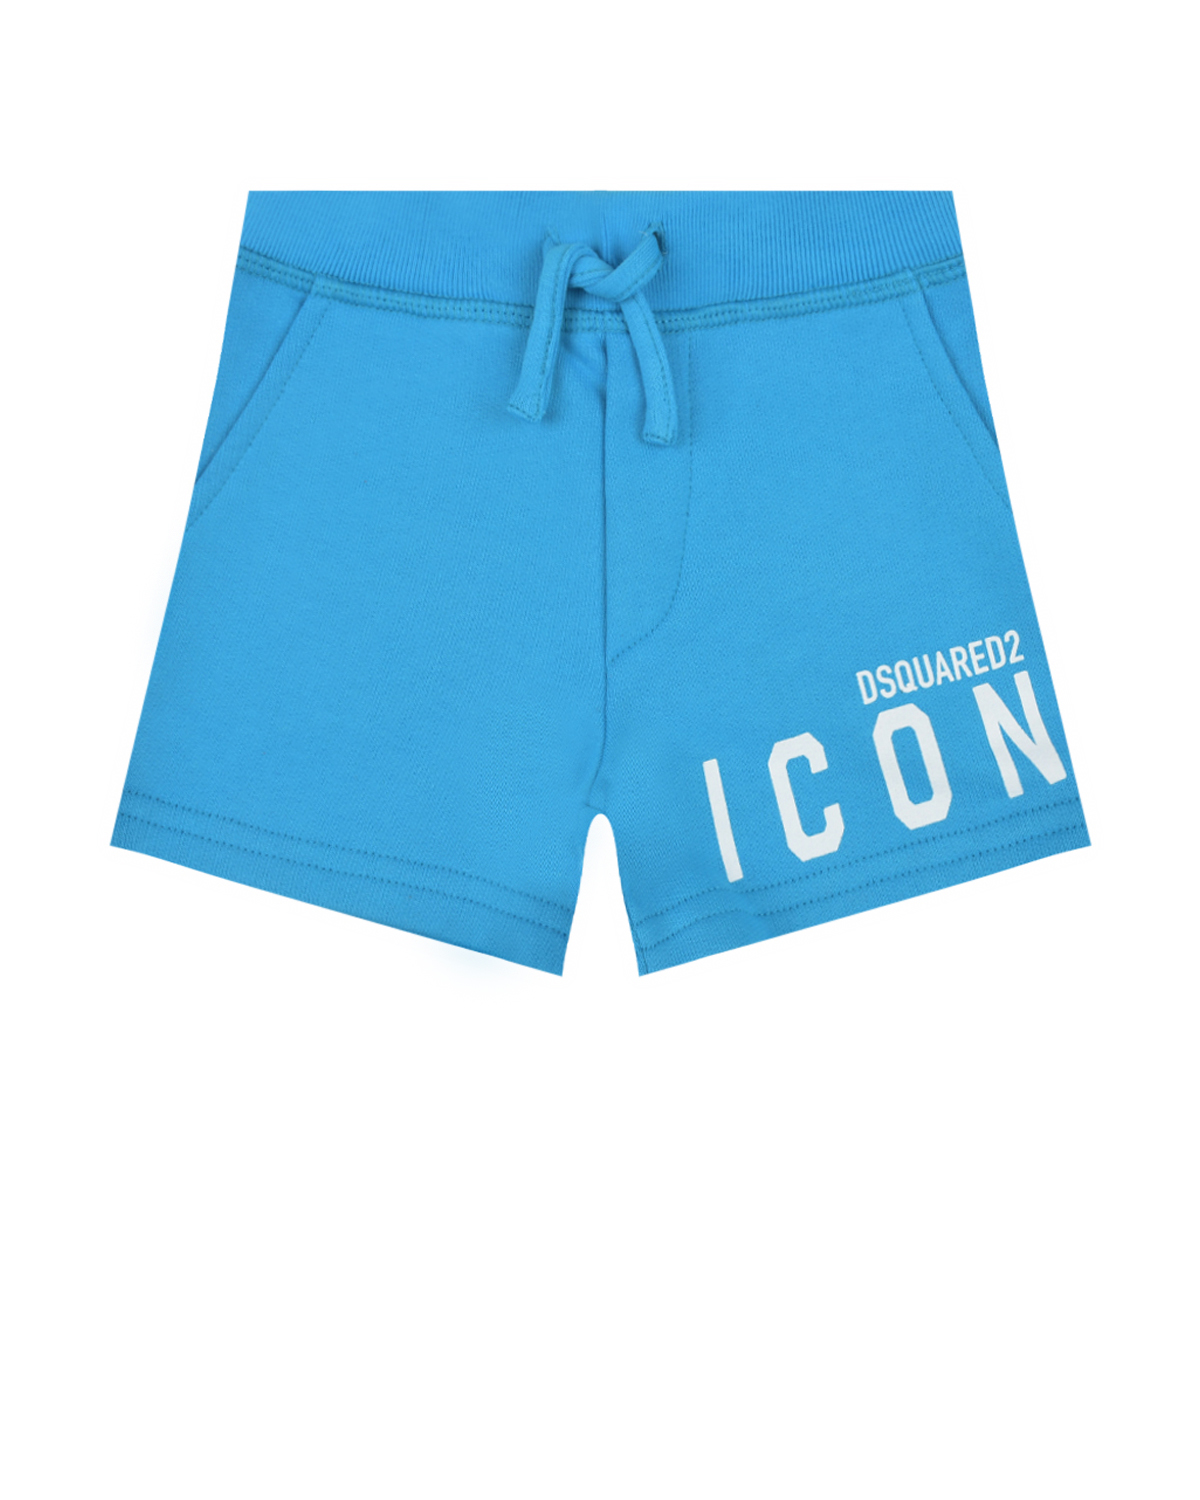 Голубые шорты с принтом ICON Dsquared2 трусы шорты мужские голубые с принтом